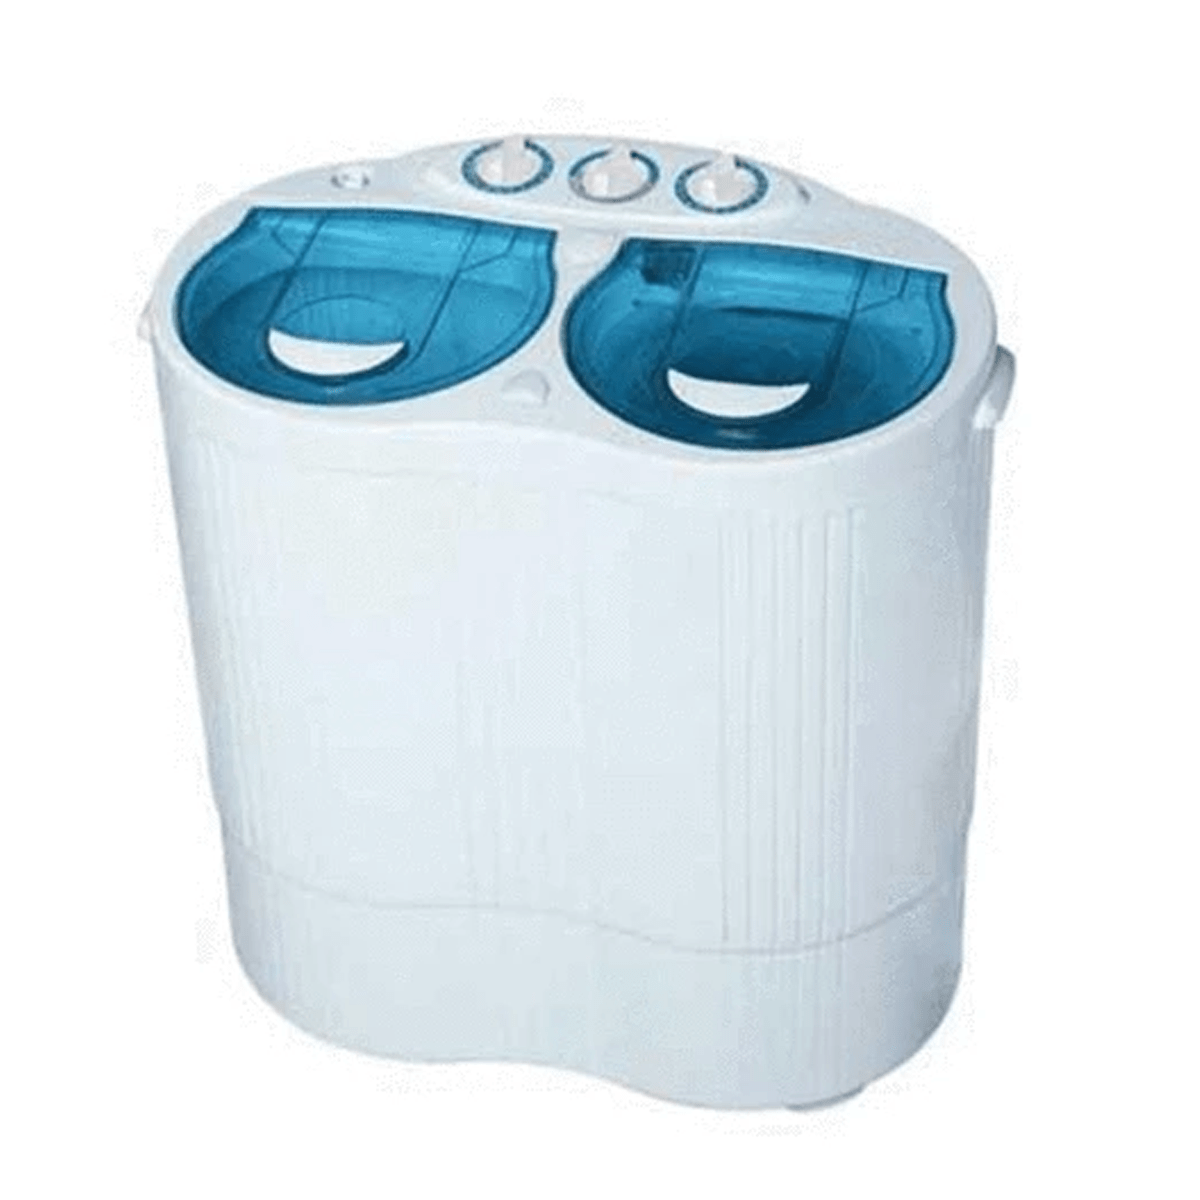 Nikai Top Load Semi Automatic Baby Washing Machine 2-5 Kg